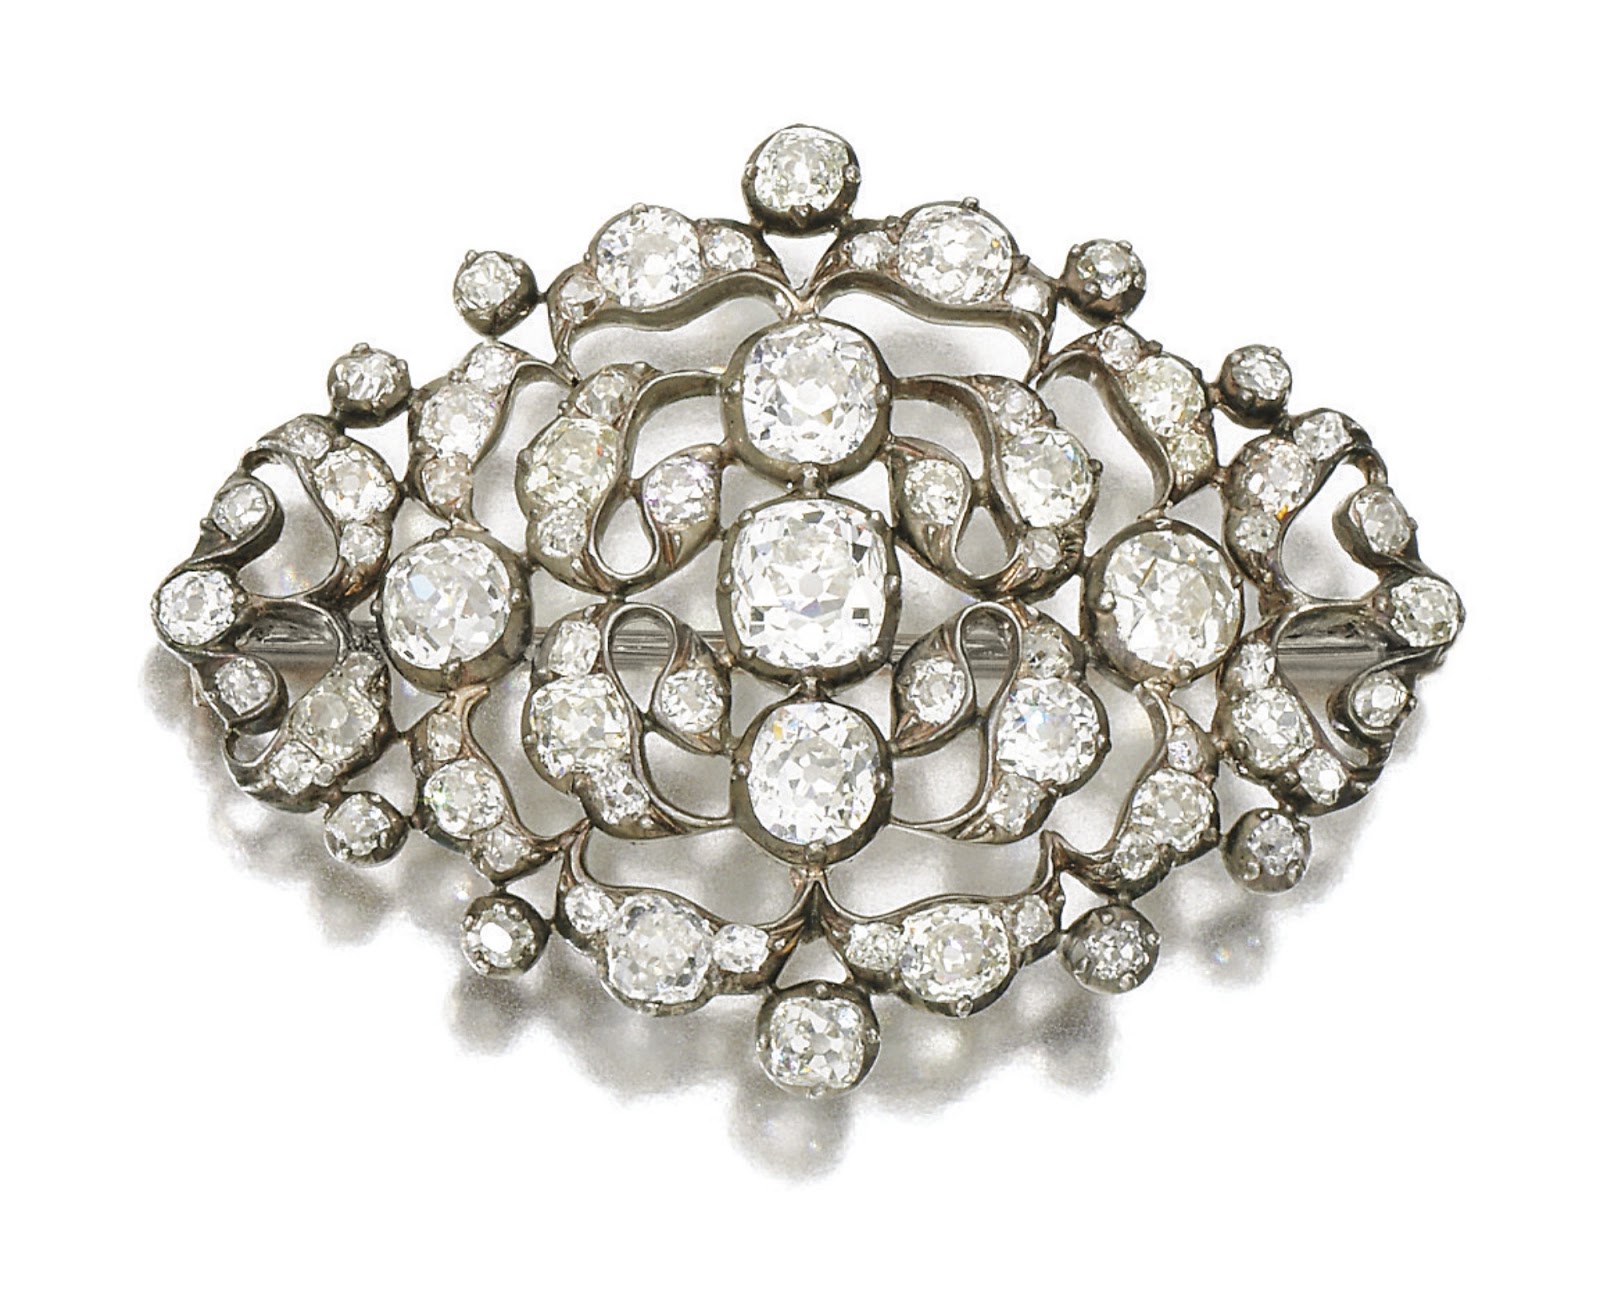 Marie Poutine's Jewels & Royals: So many Diamonds...